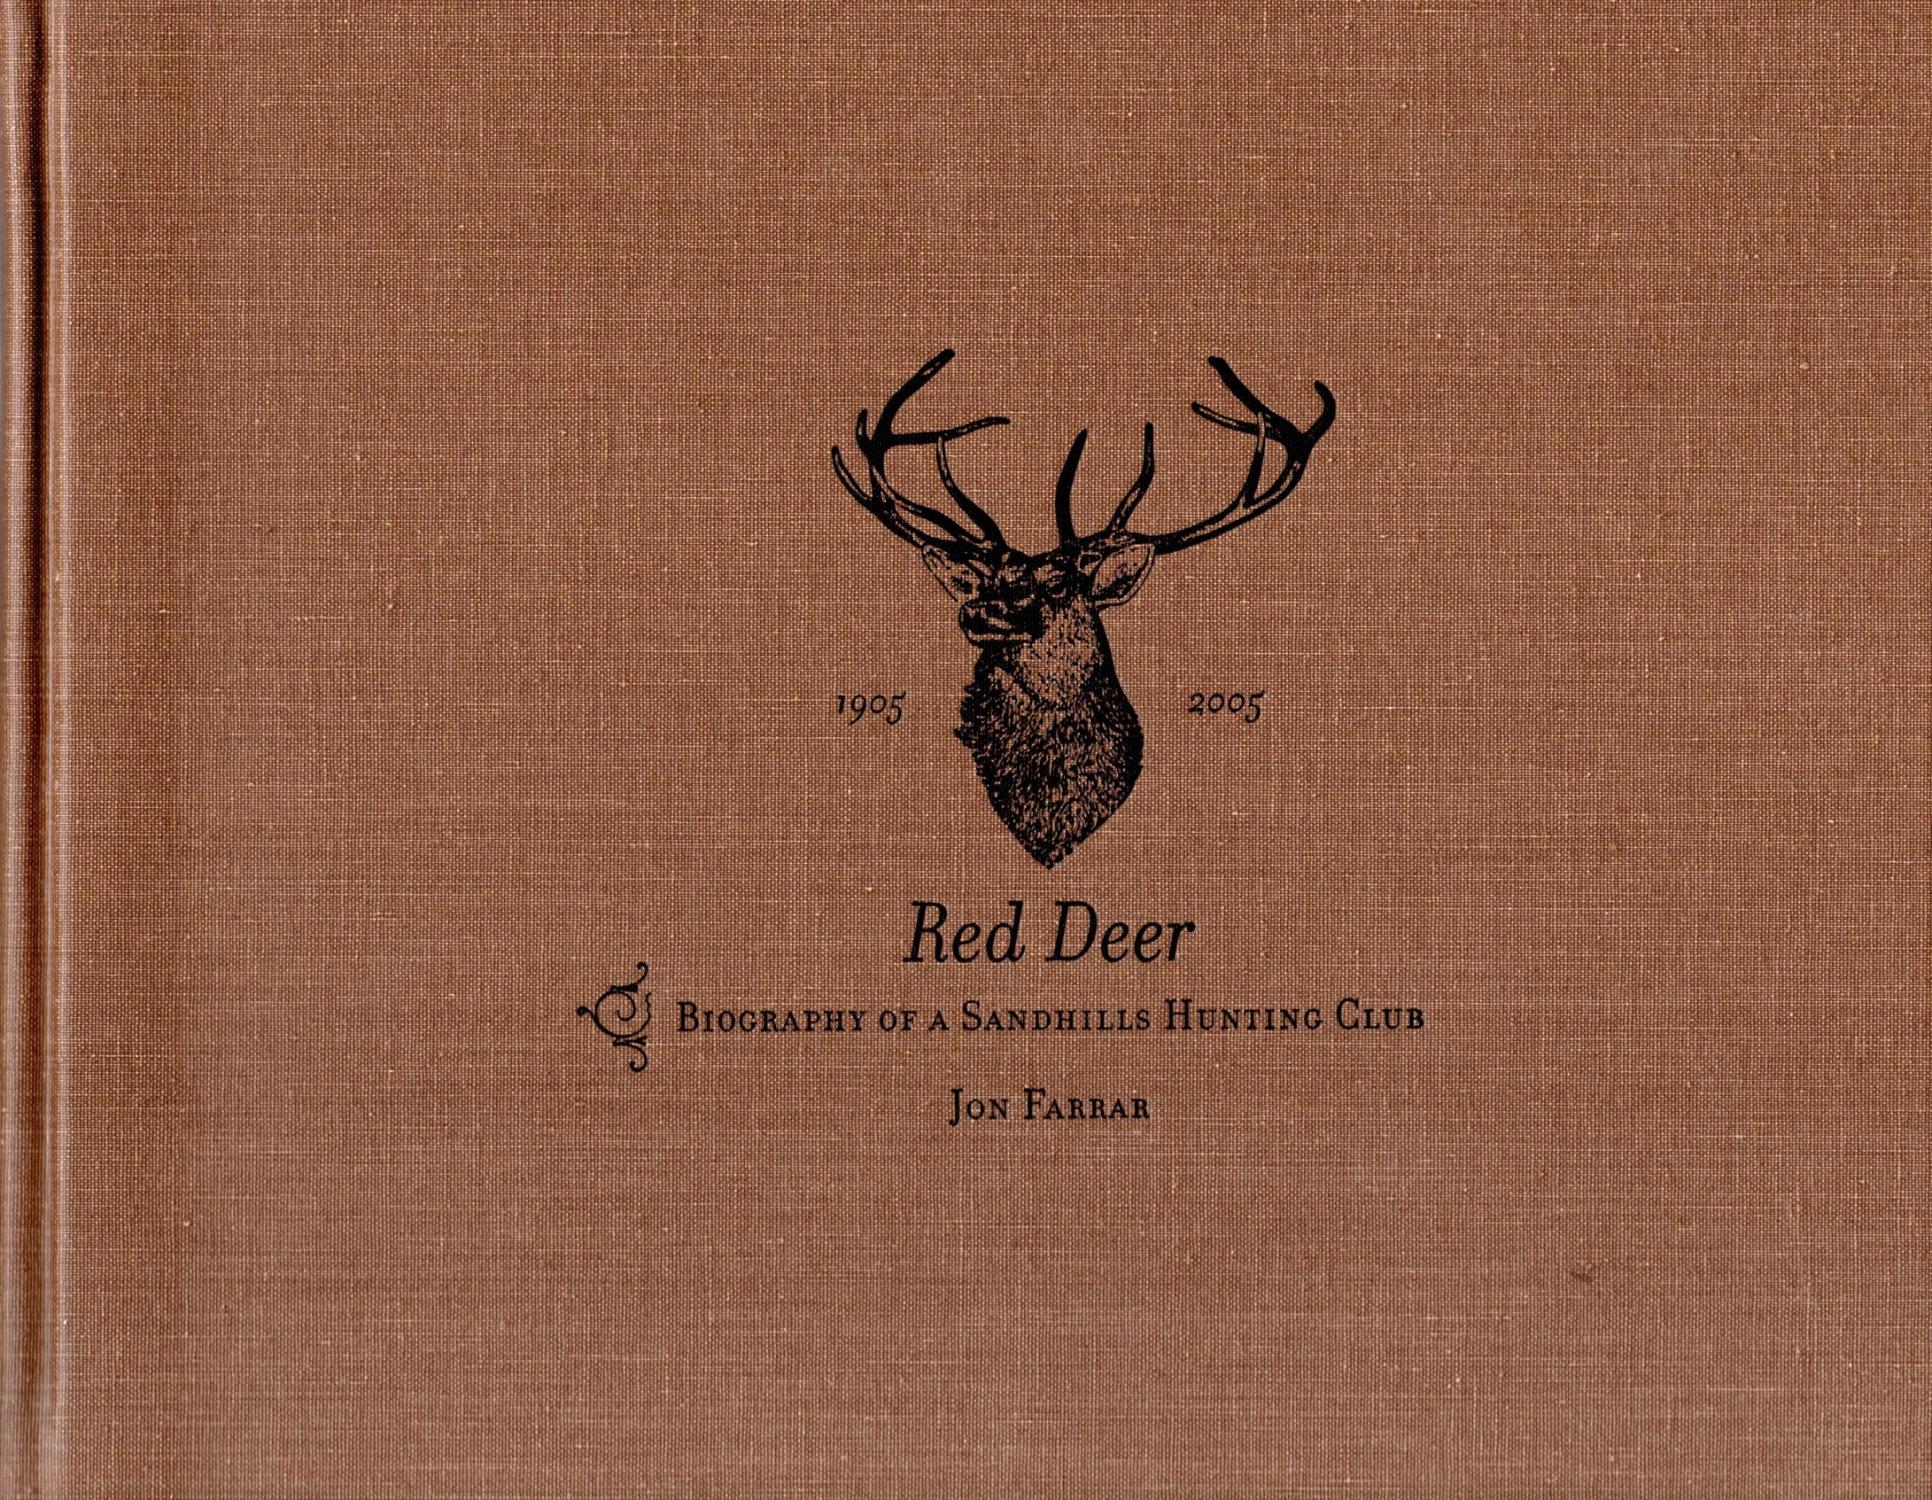 Red Deer: Biography of a Sandhills Hunting Club